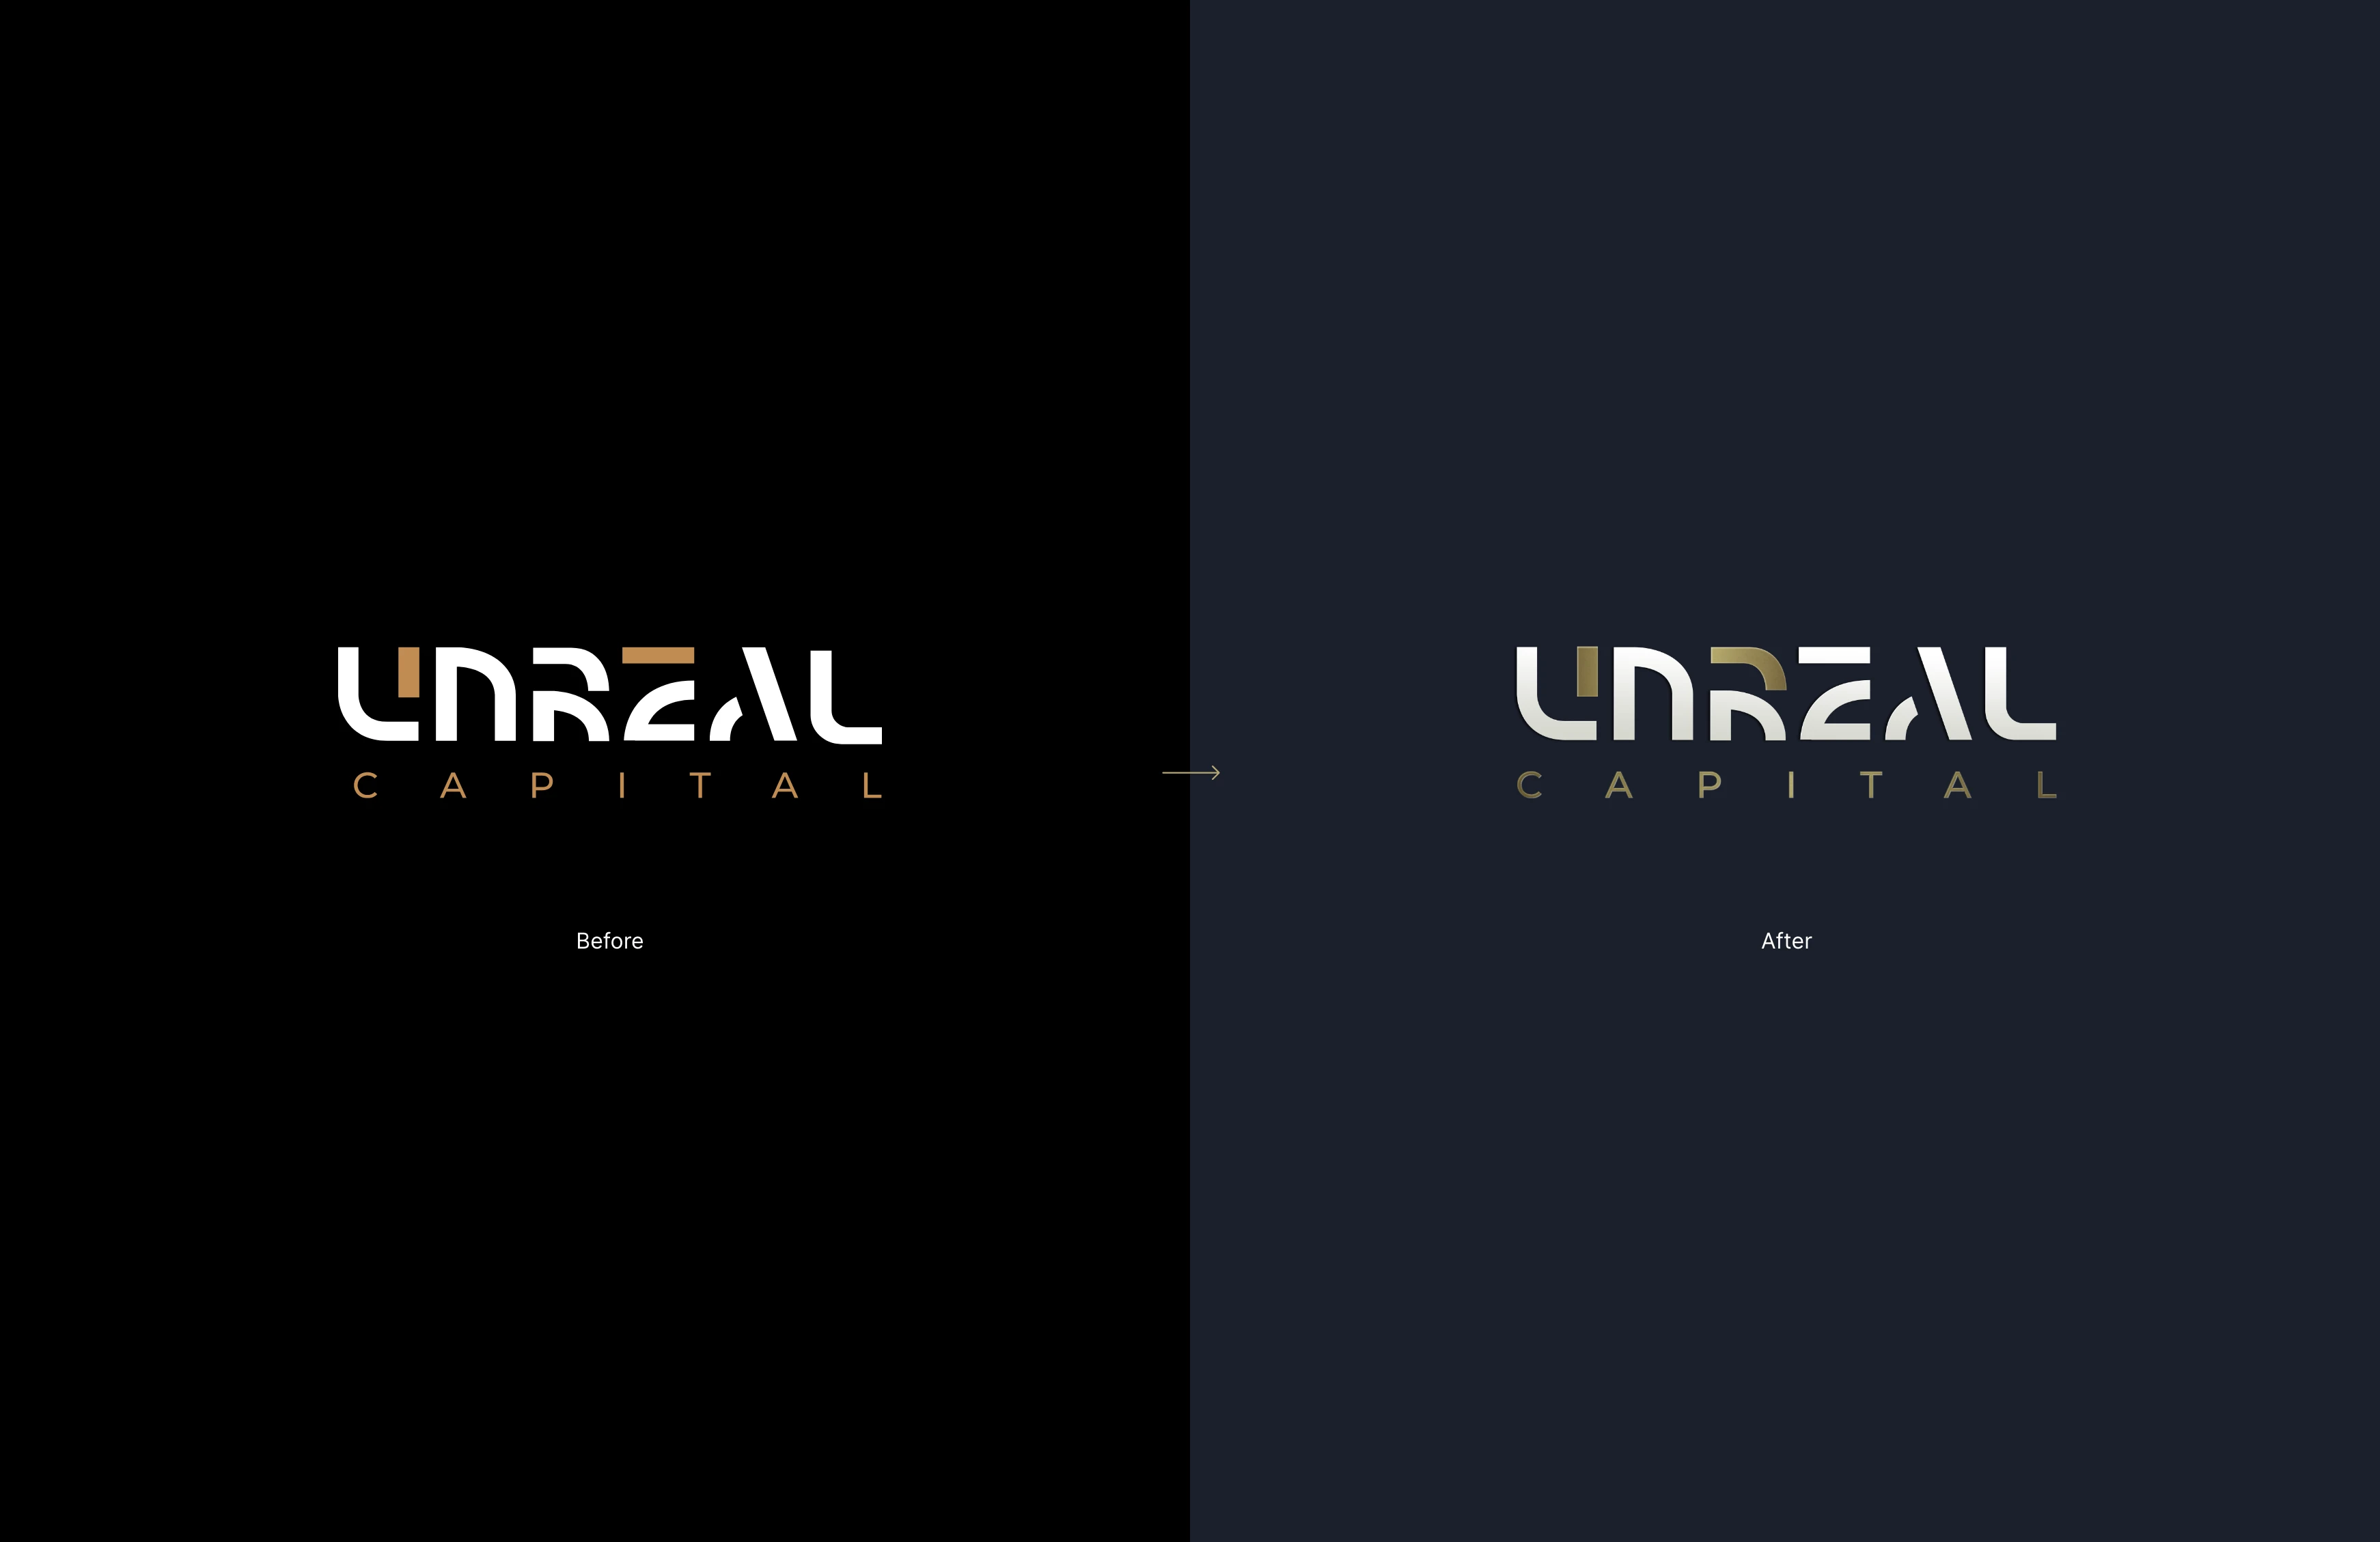 UnrealCapital logos redesign